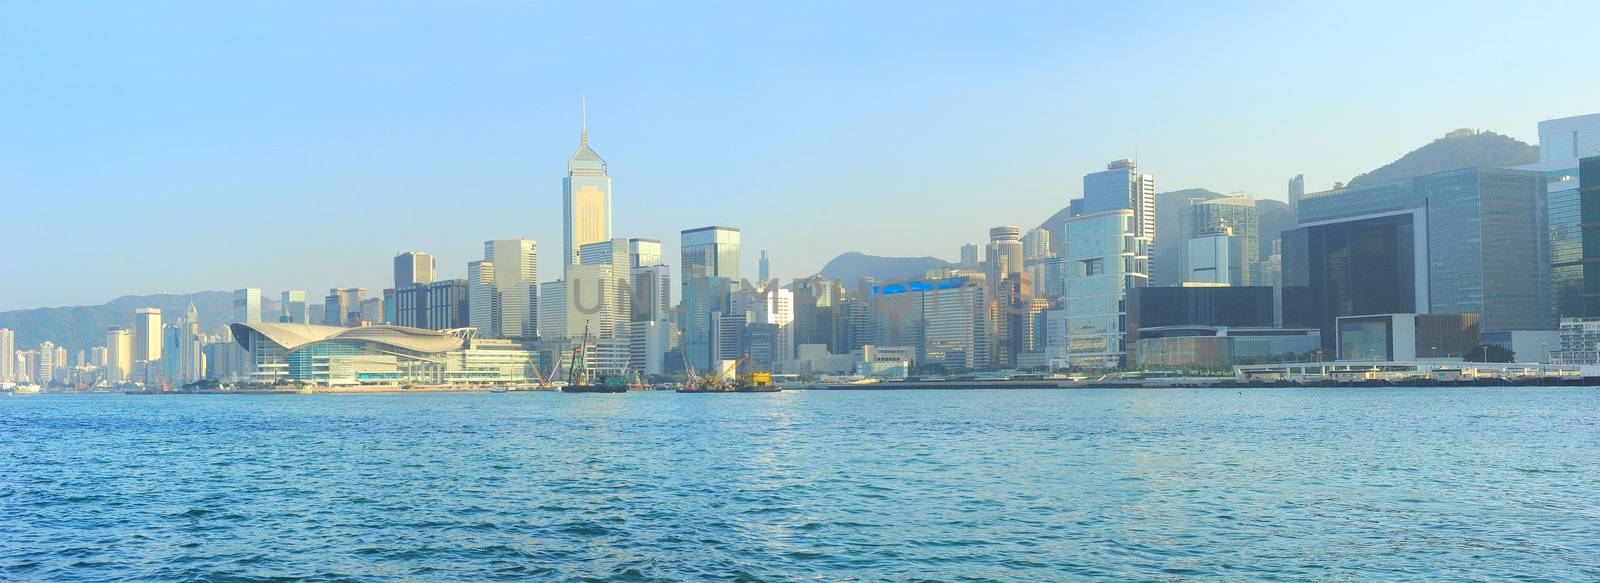 Hong Kong island by joyfull